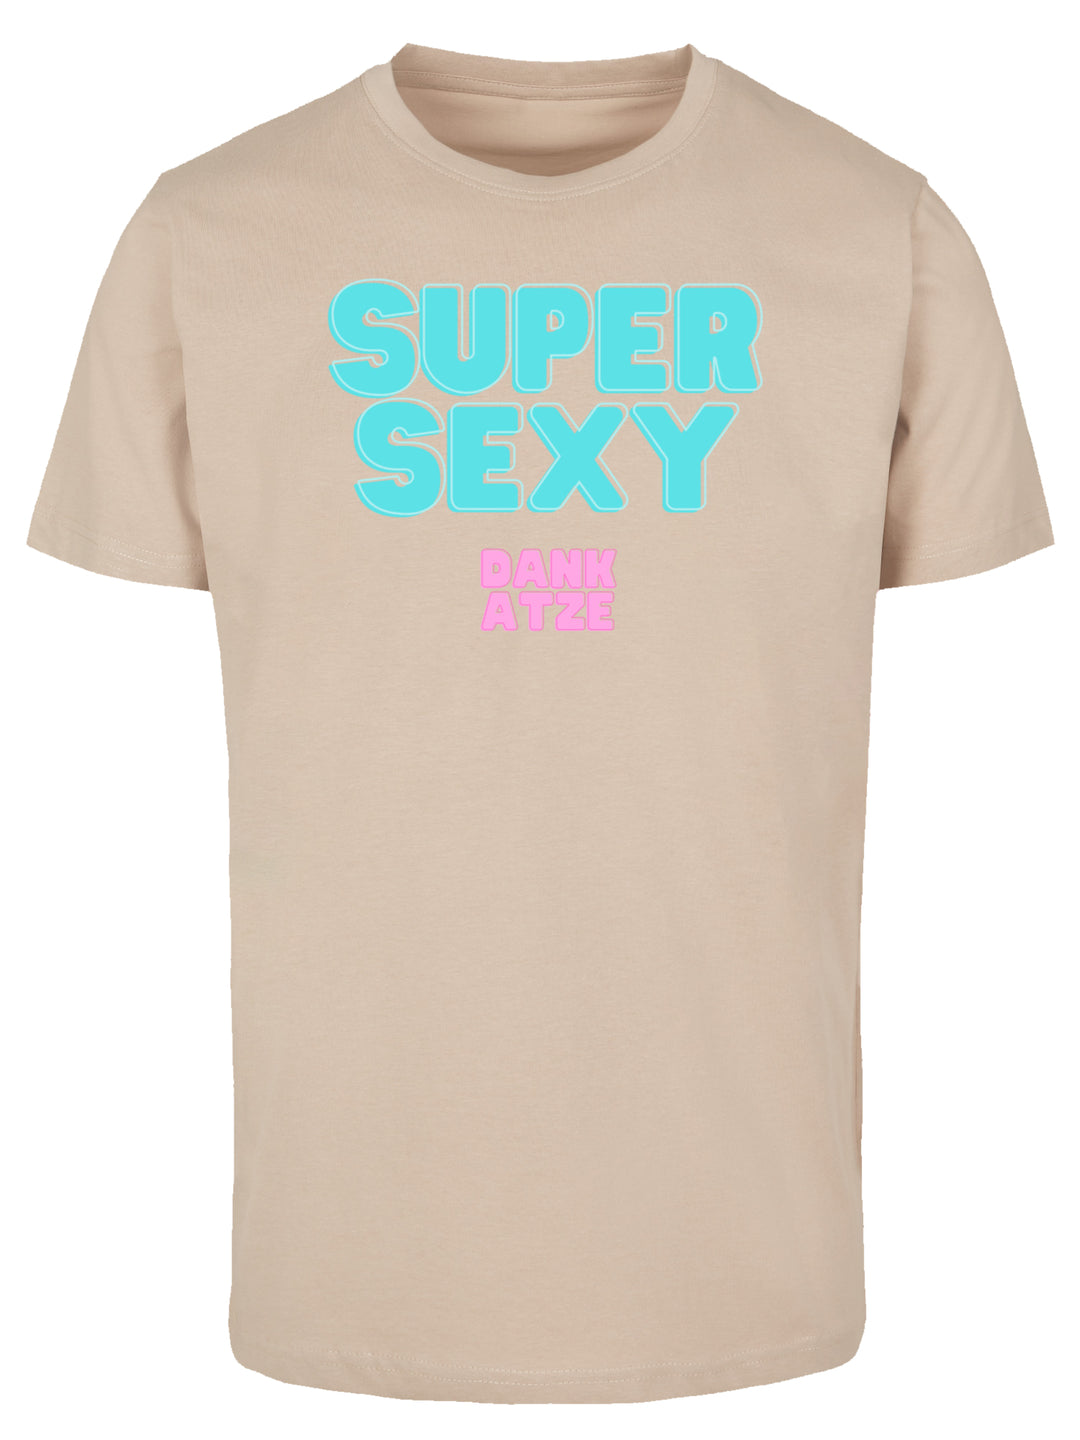 SUPER SEXY Tee | Atze